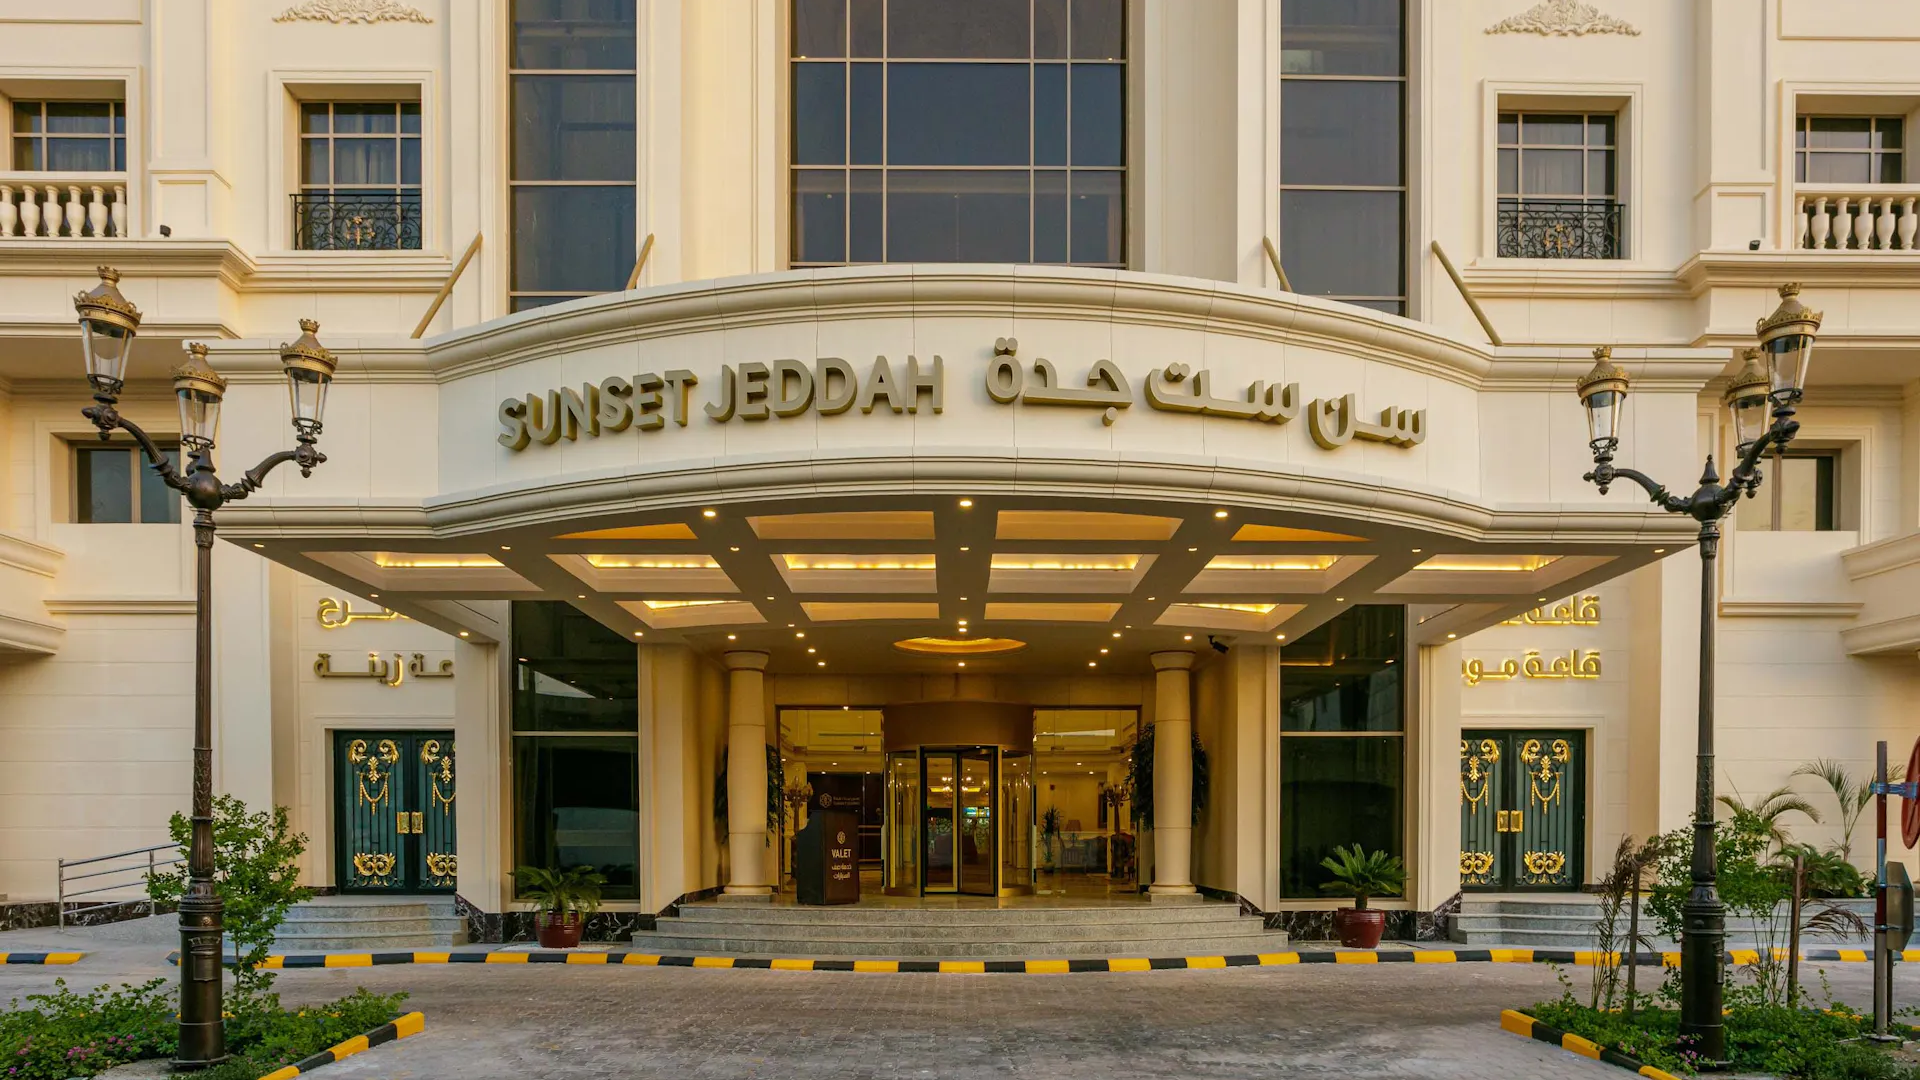 Sunset Jeddah - PR